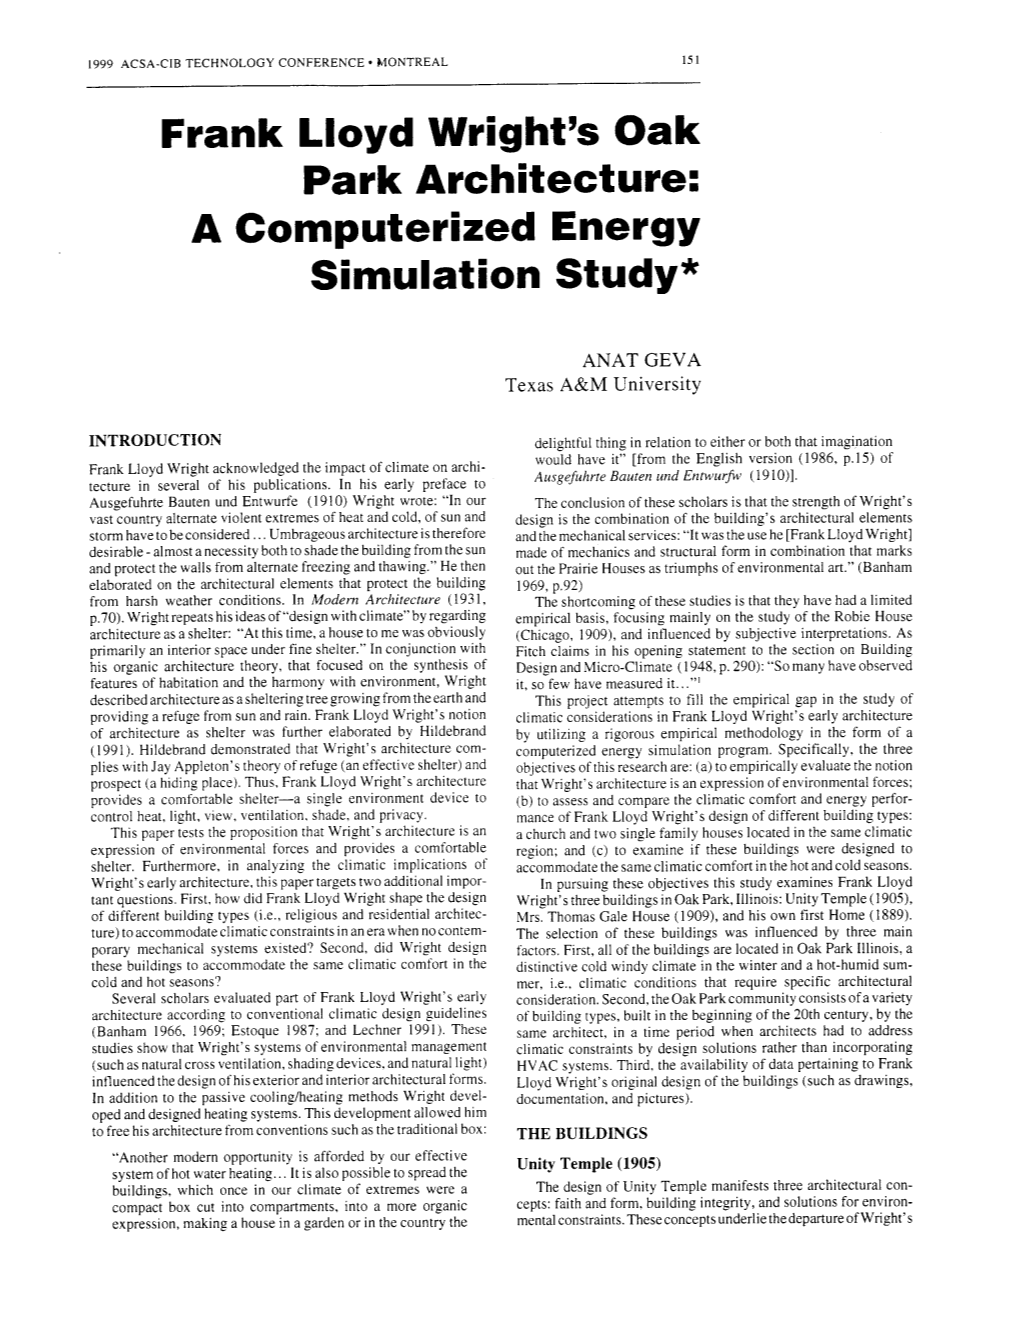 Frank Lloyd Wright's Oak Park Architecture: a Computerized Energy Simulation Study*